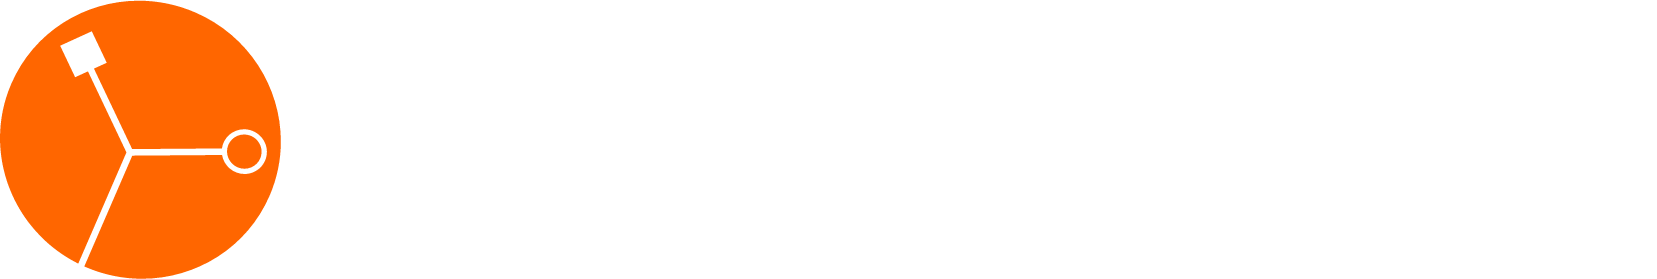 Exscientia logo grand pour les fonds sombres (PNG transparent)